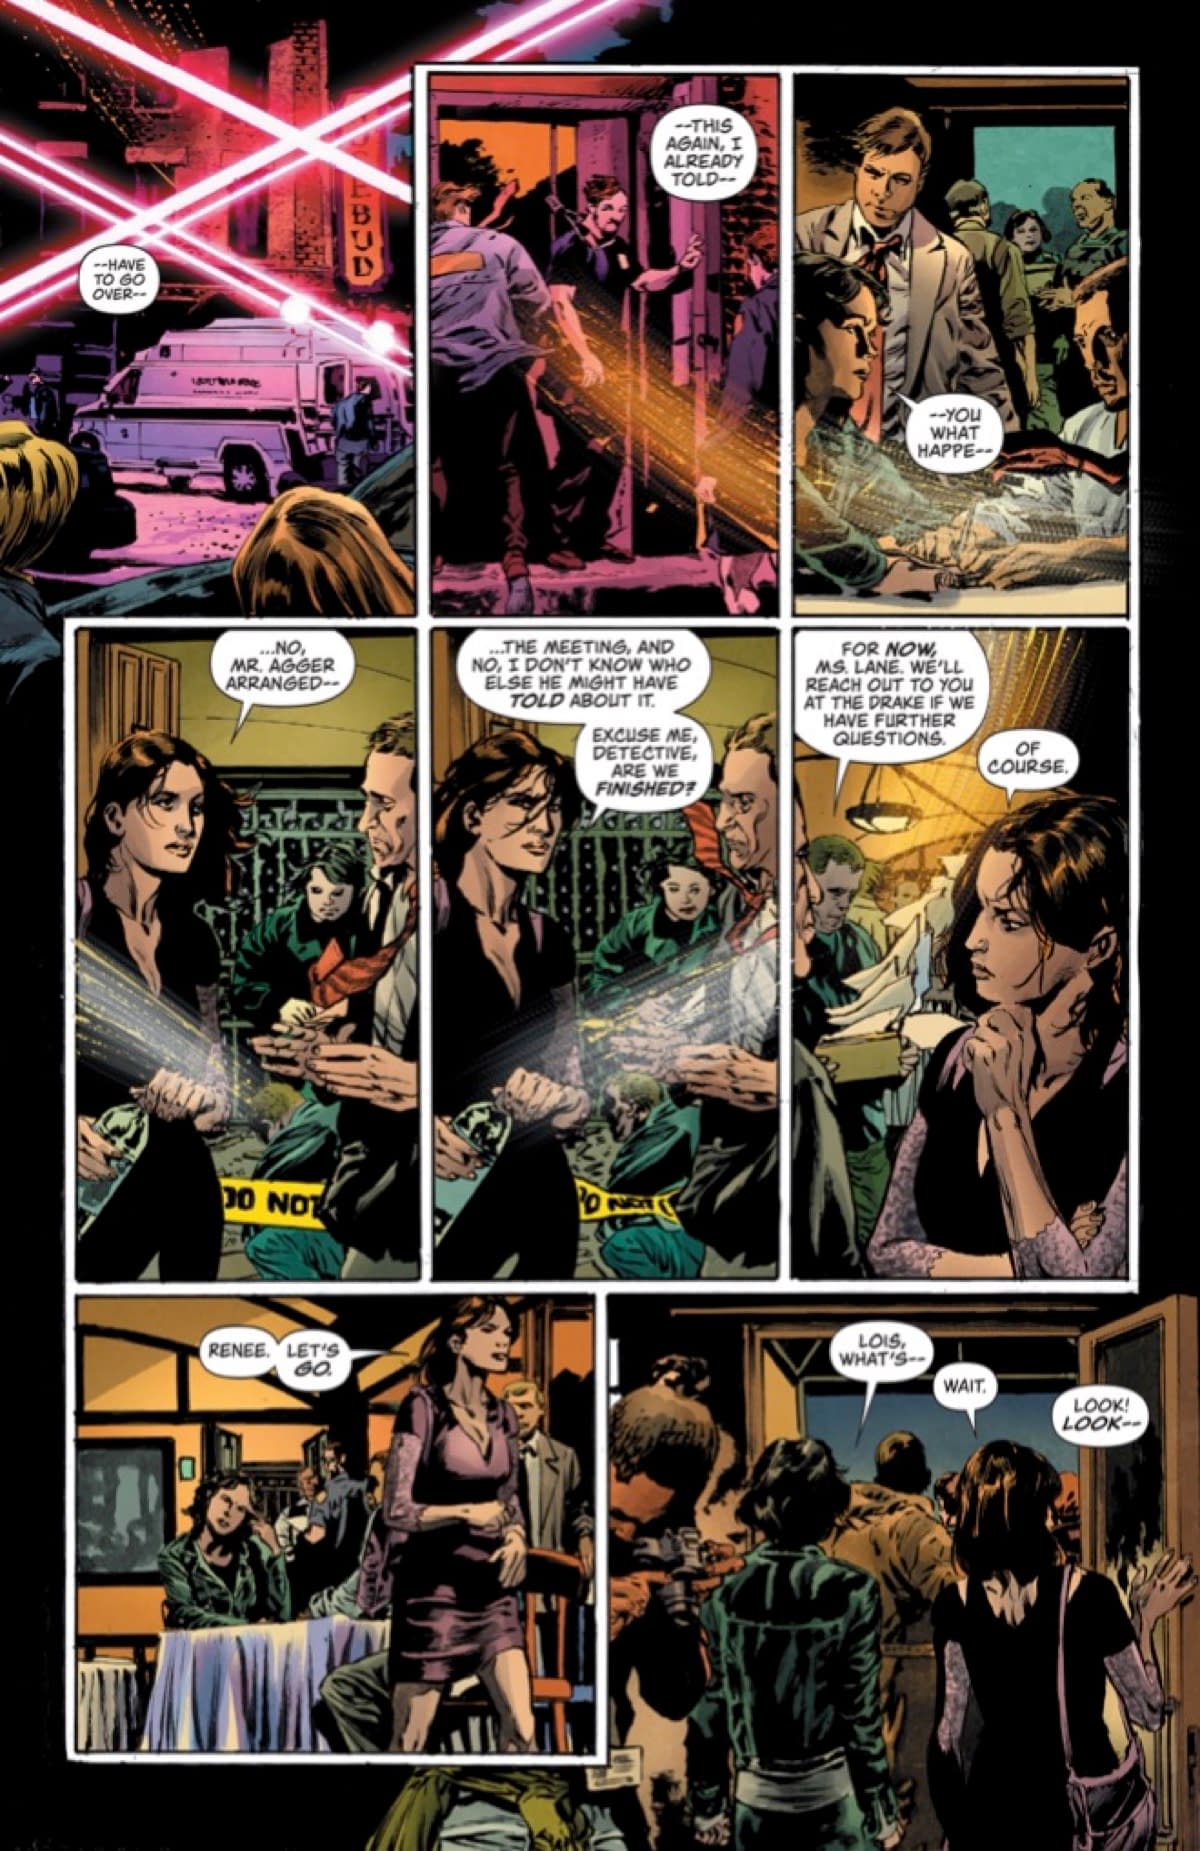 EXCLUSIVE Lois Lane #3 Preview